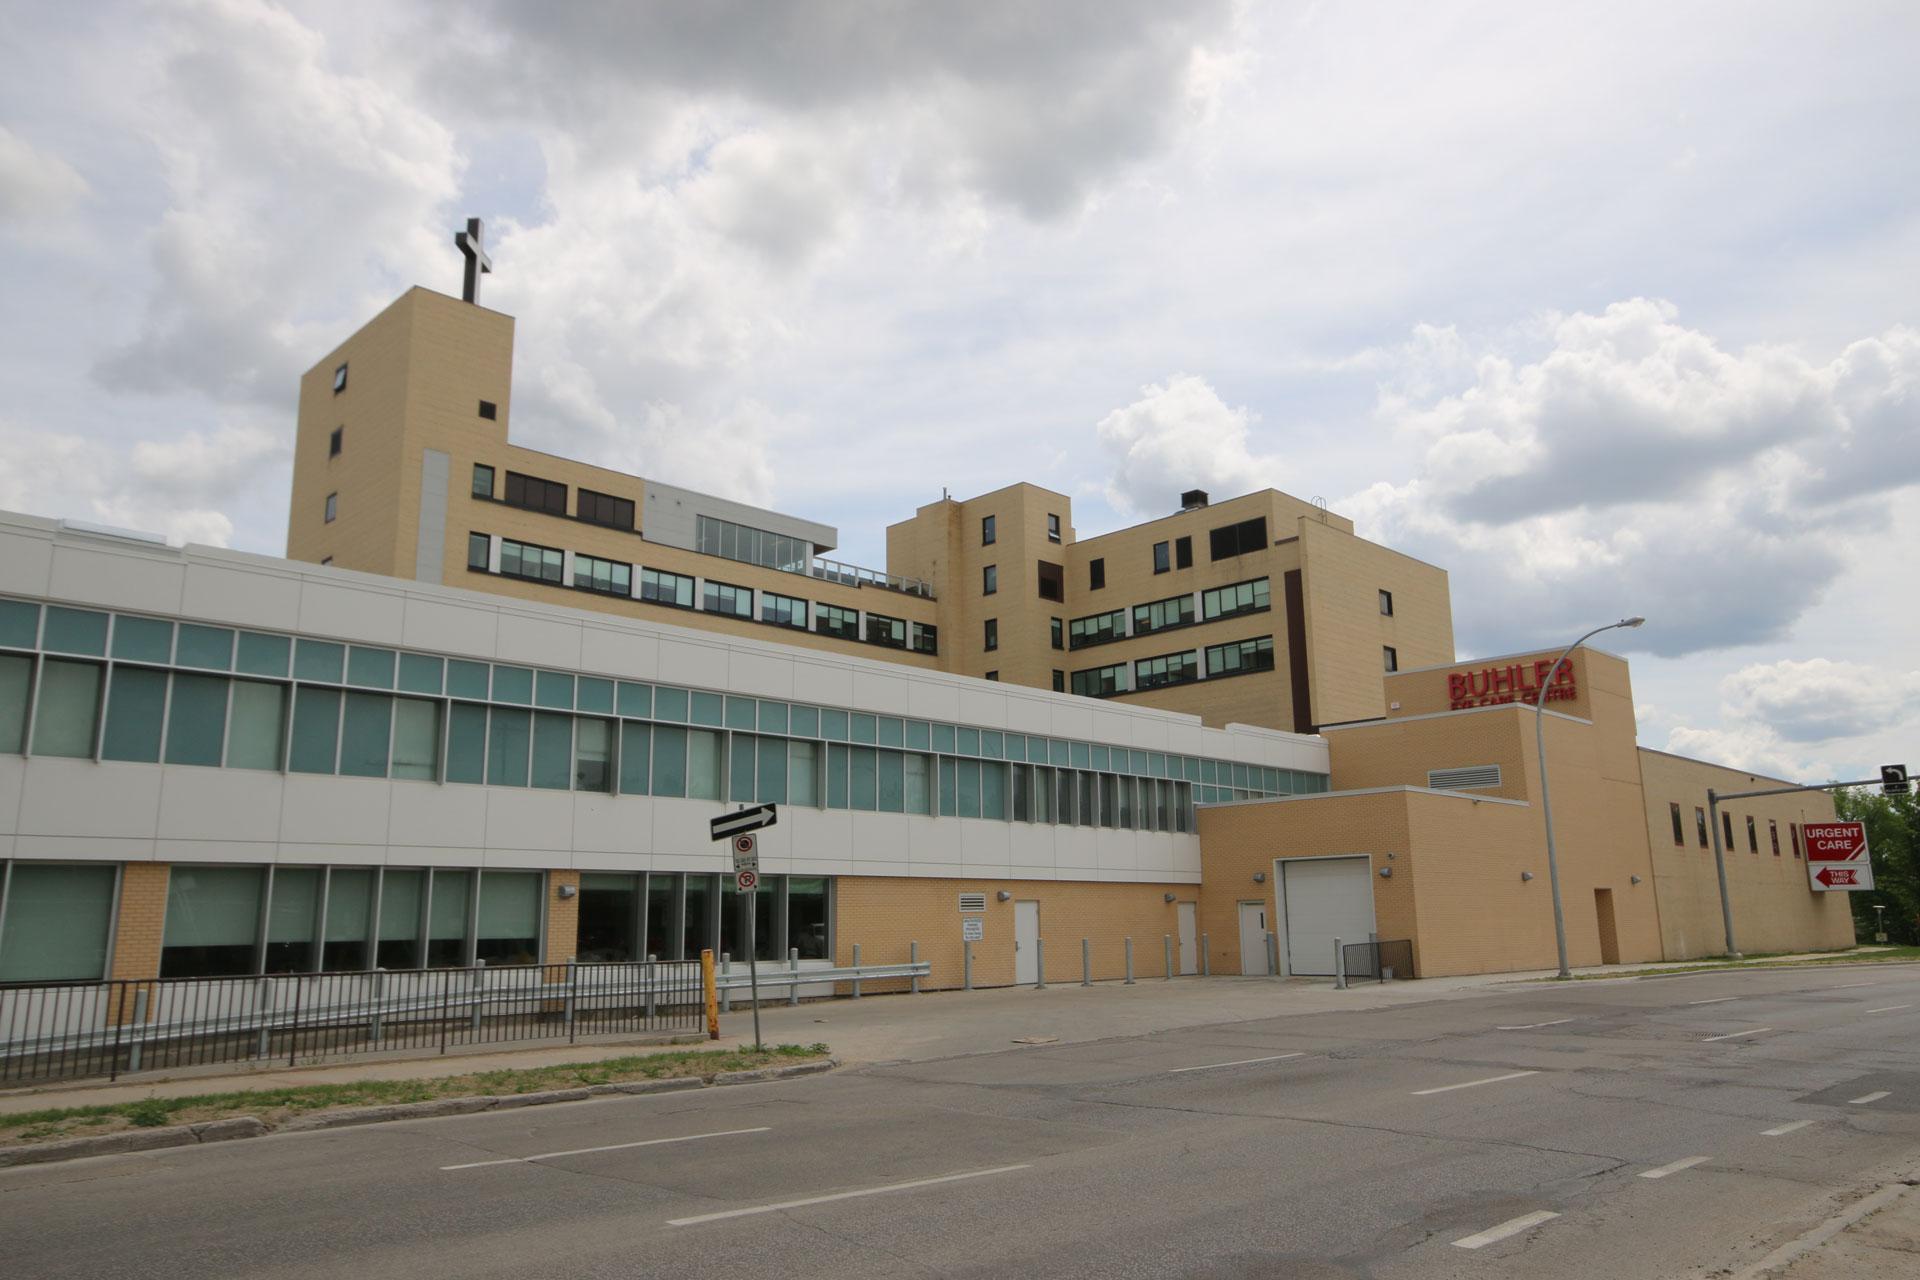 Misericordia Health Centre